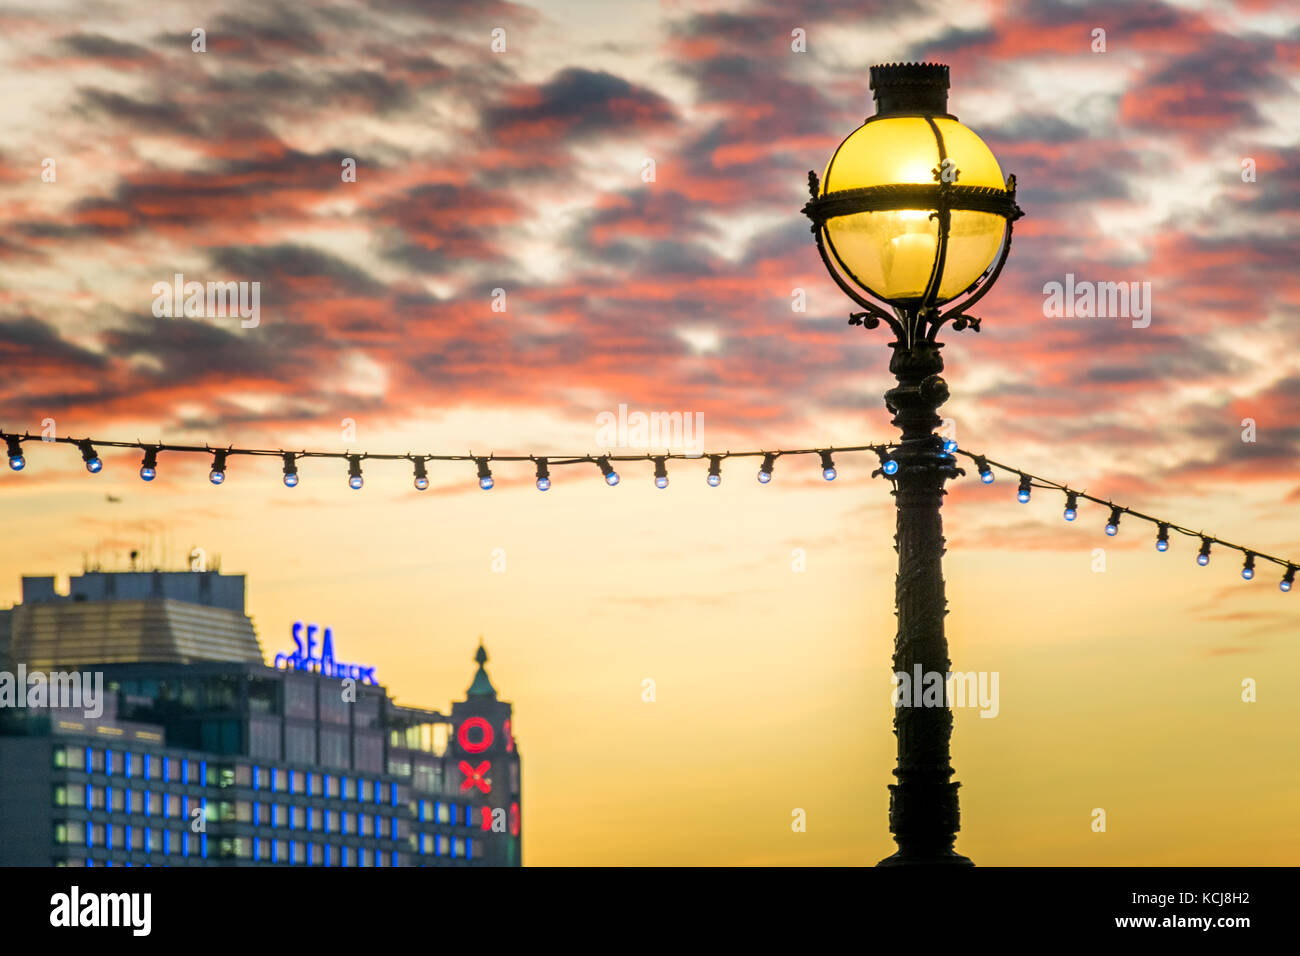 Decorative globe street light lamp post in London at sunset Stock Photo